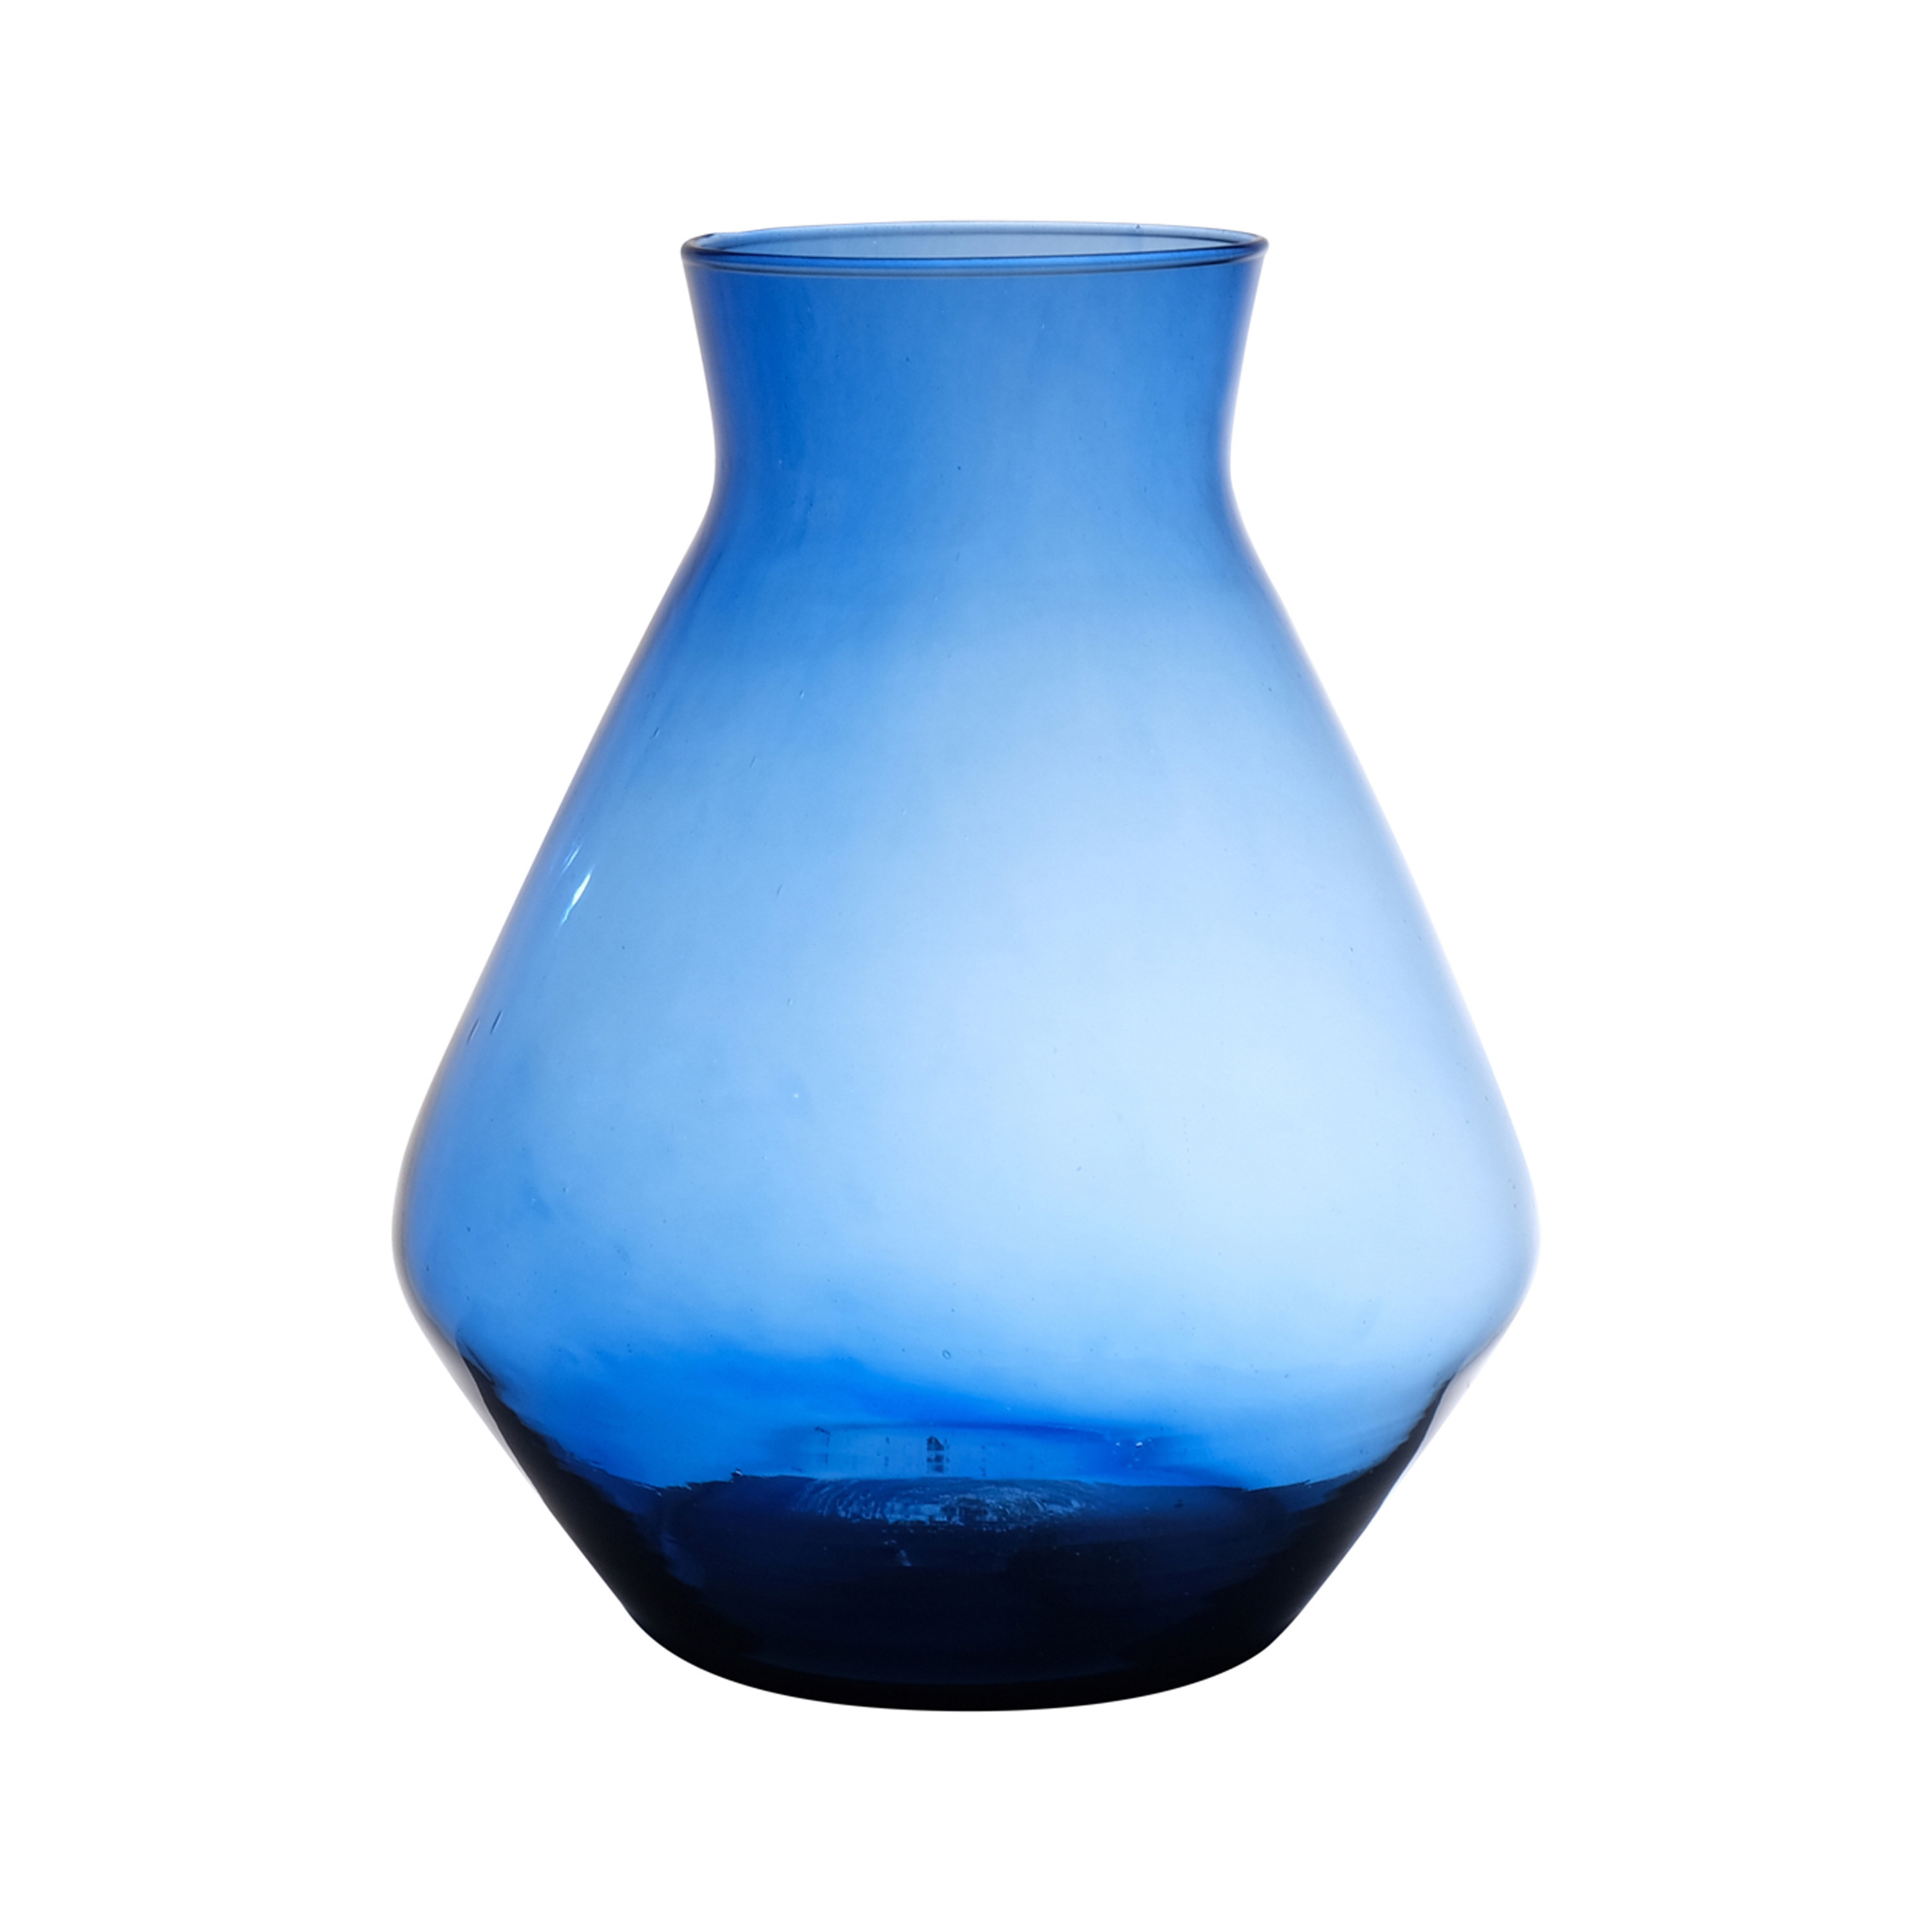 Hakbijl Glass Bloemenvaas Alexandra - transparant blauw - eco glas - D19 x H25 cm -